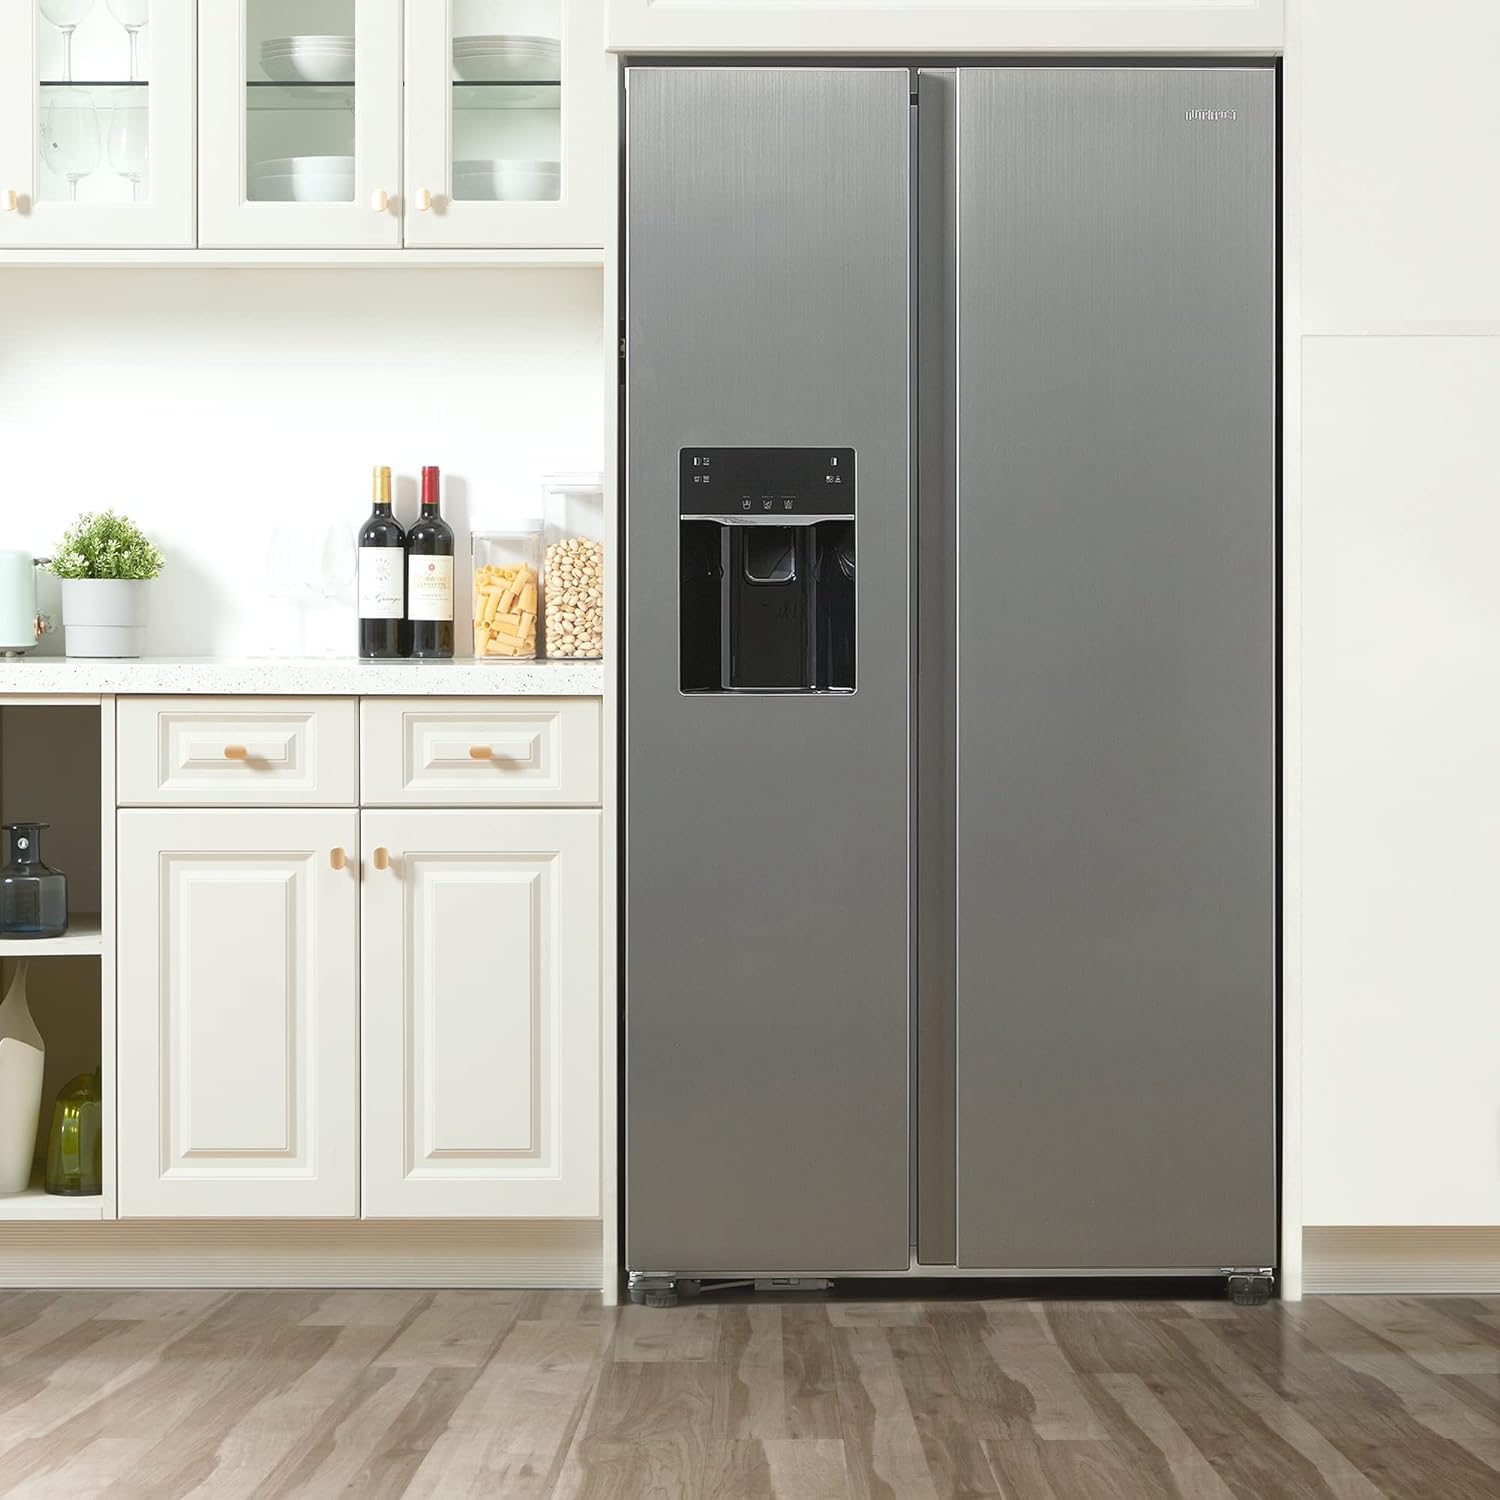 Side-by-Side Refrigerator